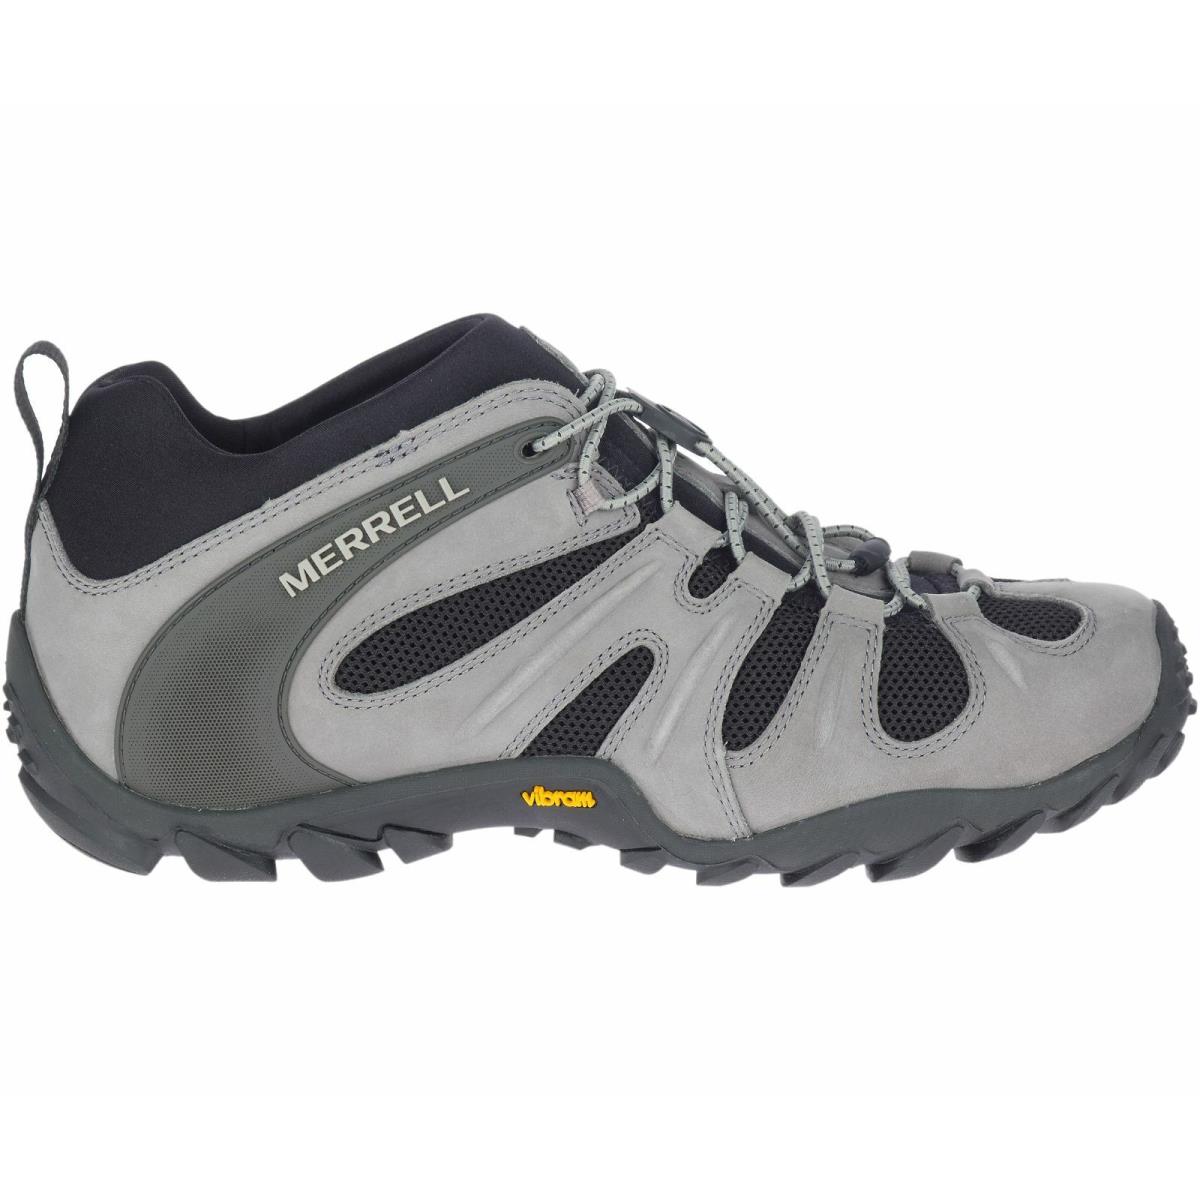 Merrell Men`s Waterproof Shock Absorbing Moisture Wicking Hiking Leather Shoes NON WATERPROOF Gray